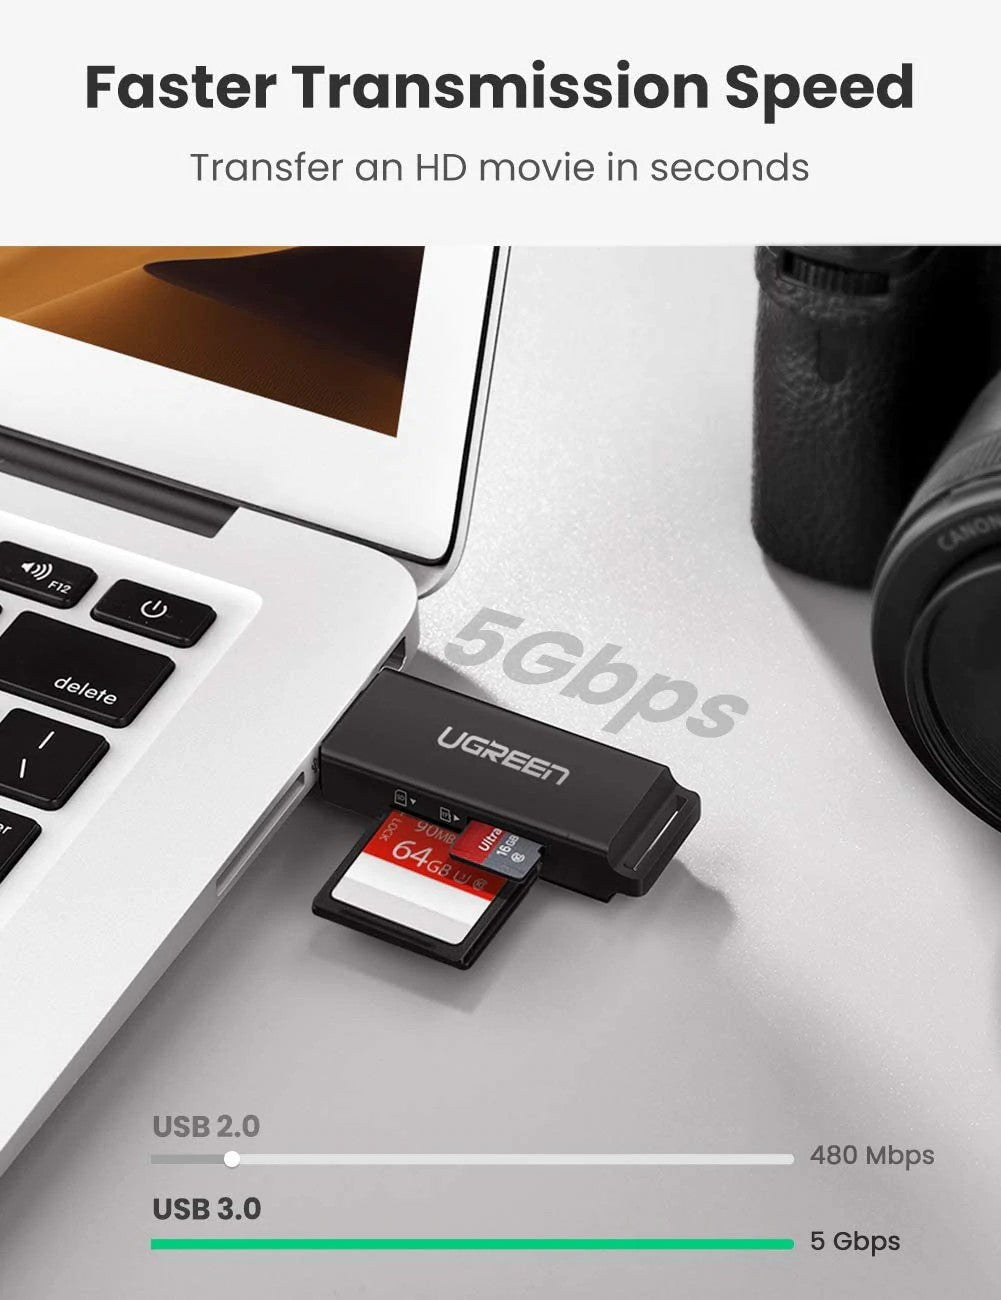 UGREEN CM104 USB 3.0 TO TF+SD DUAL CARD READER, Card Reader for SD Card & TF Card